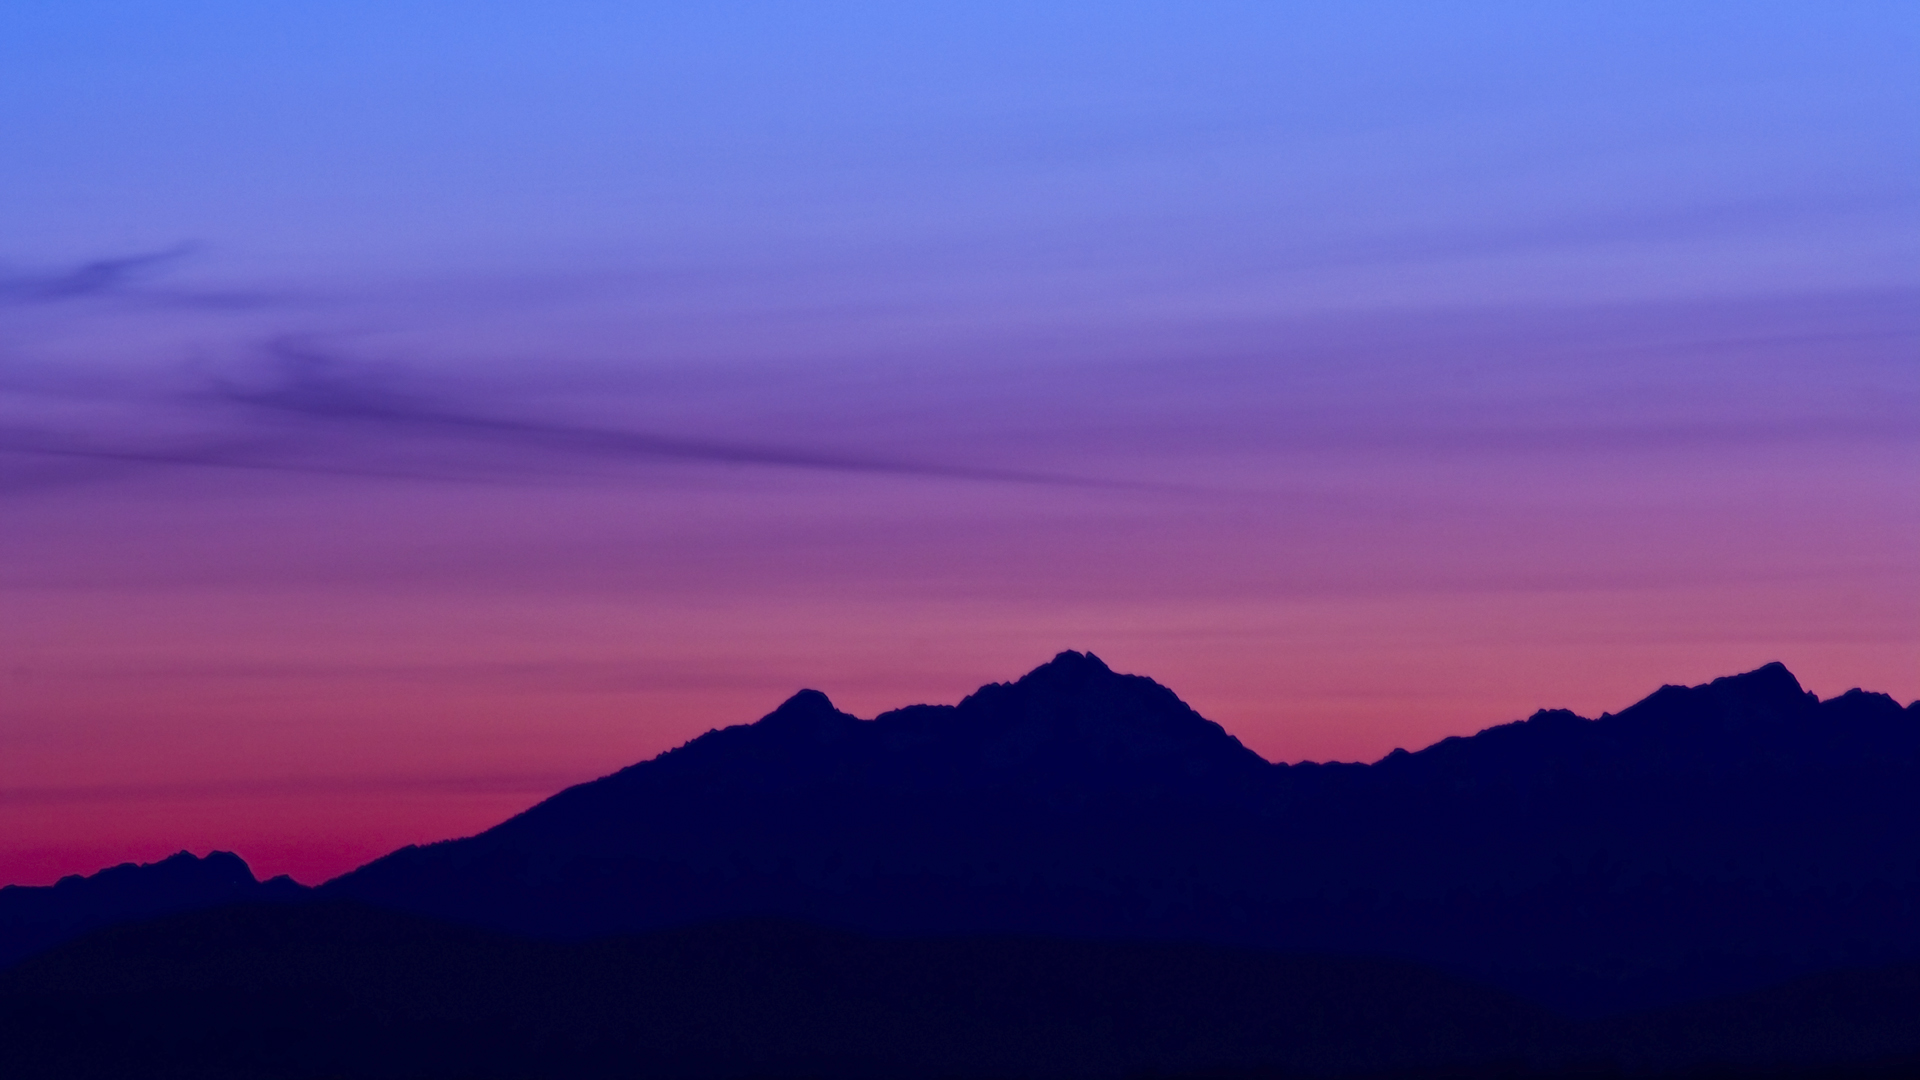 sky hd wallpapers 1080p,sky,afterglow,mountainous landforms,blue,mountain